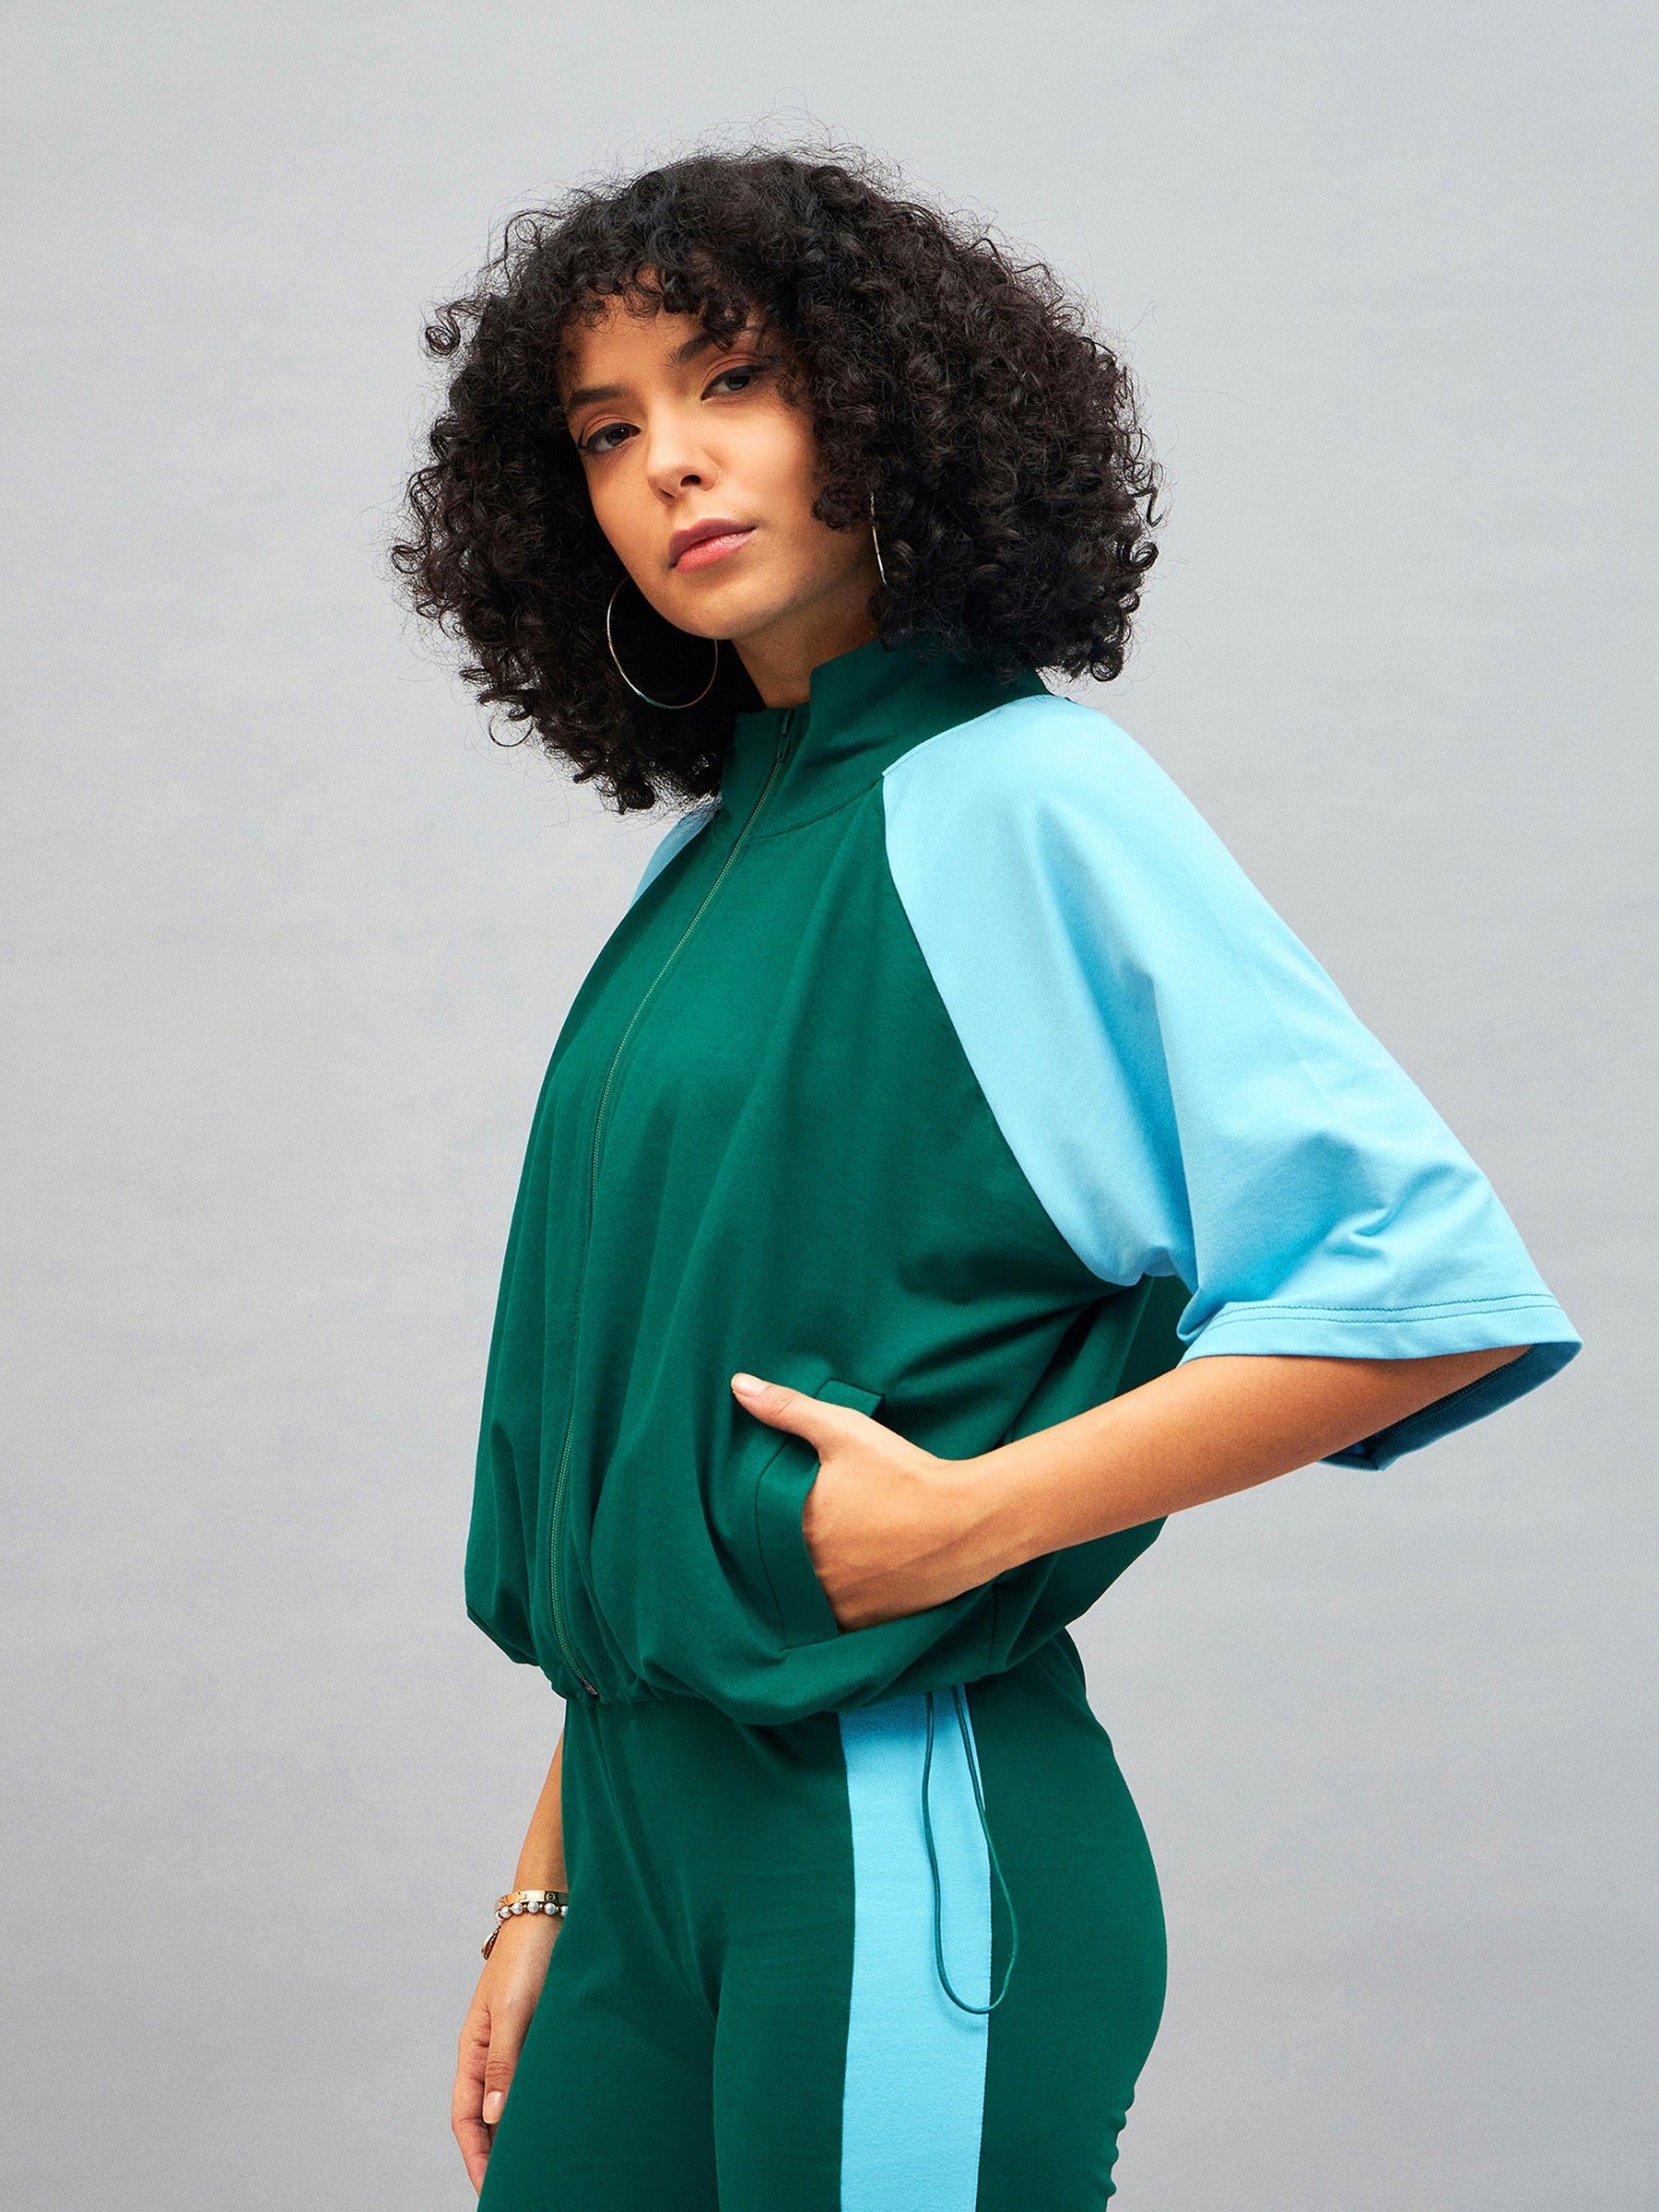 Green Knitted Color Block Jacket-SASSAFRAS